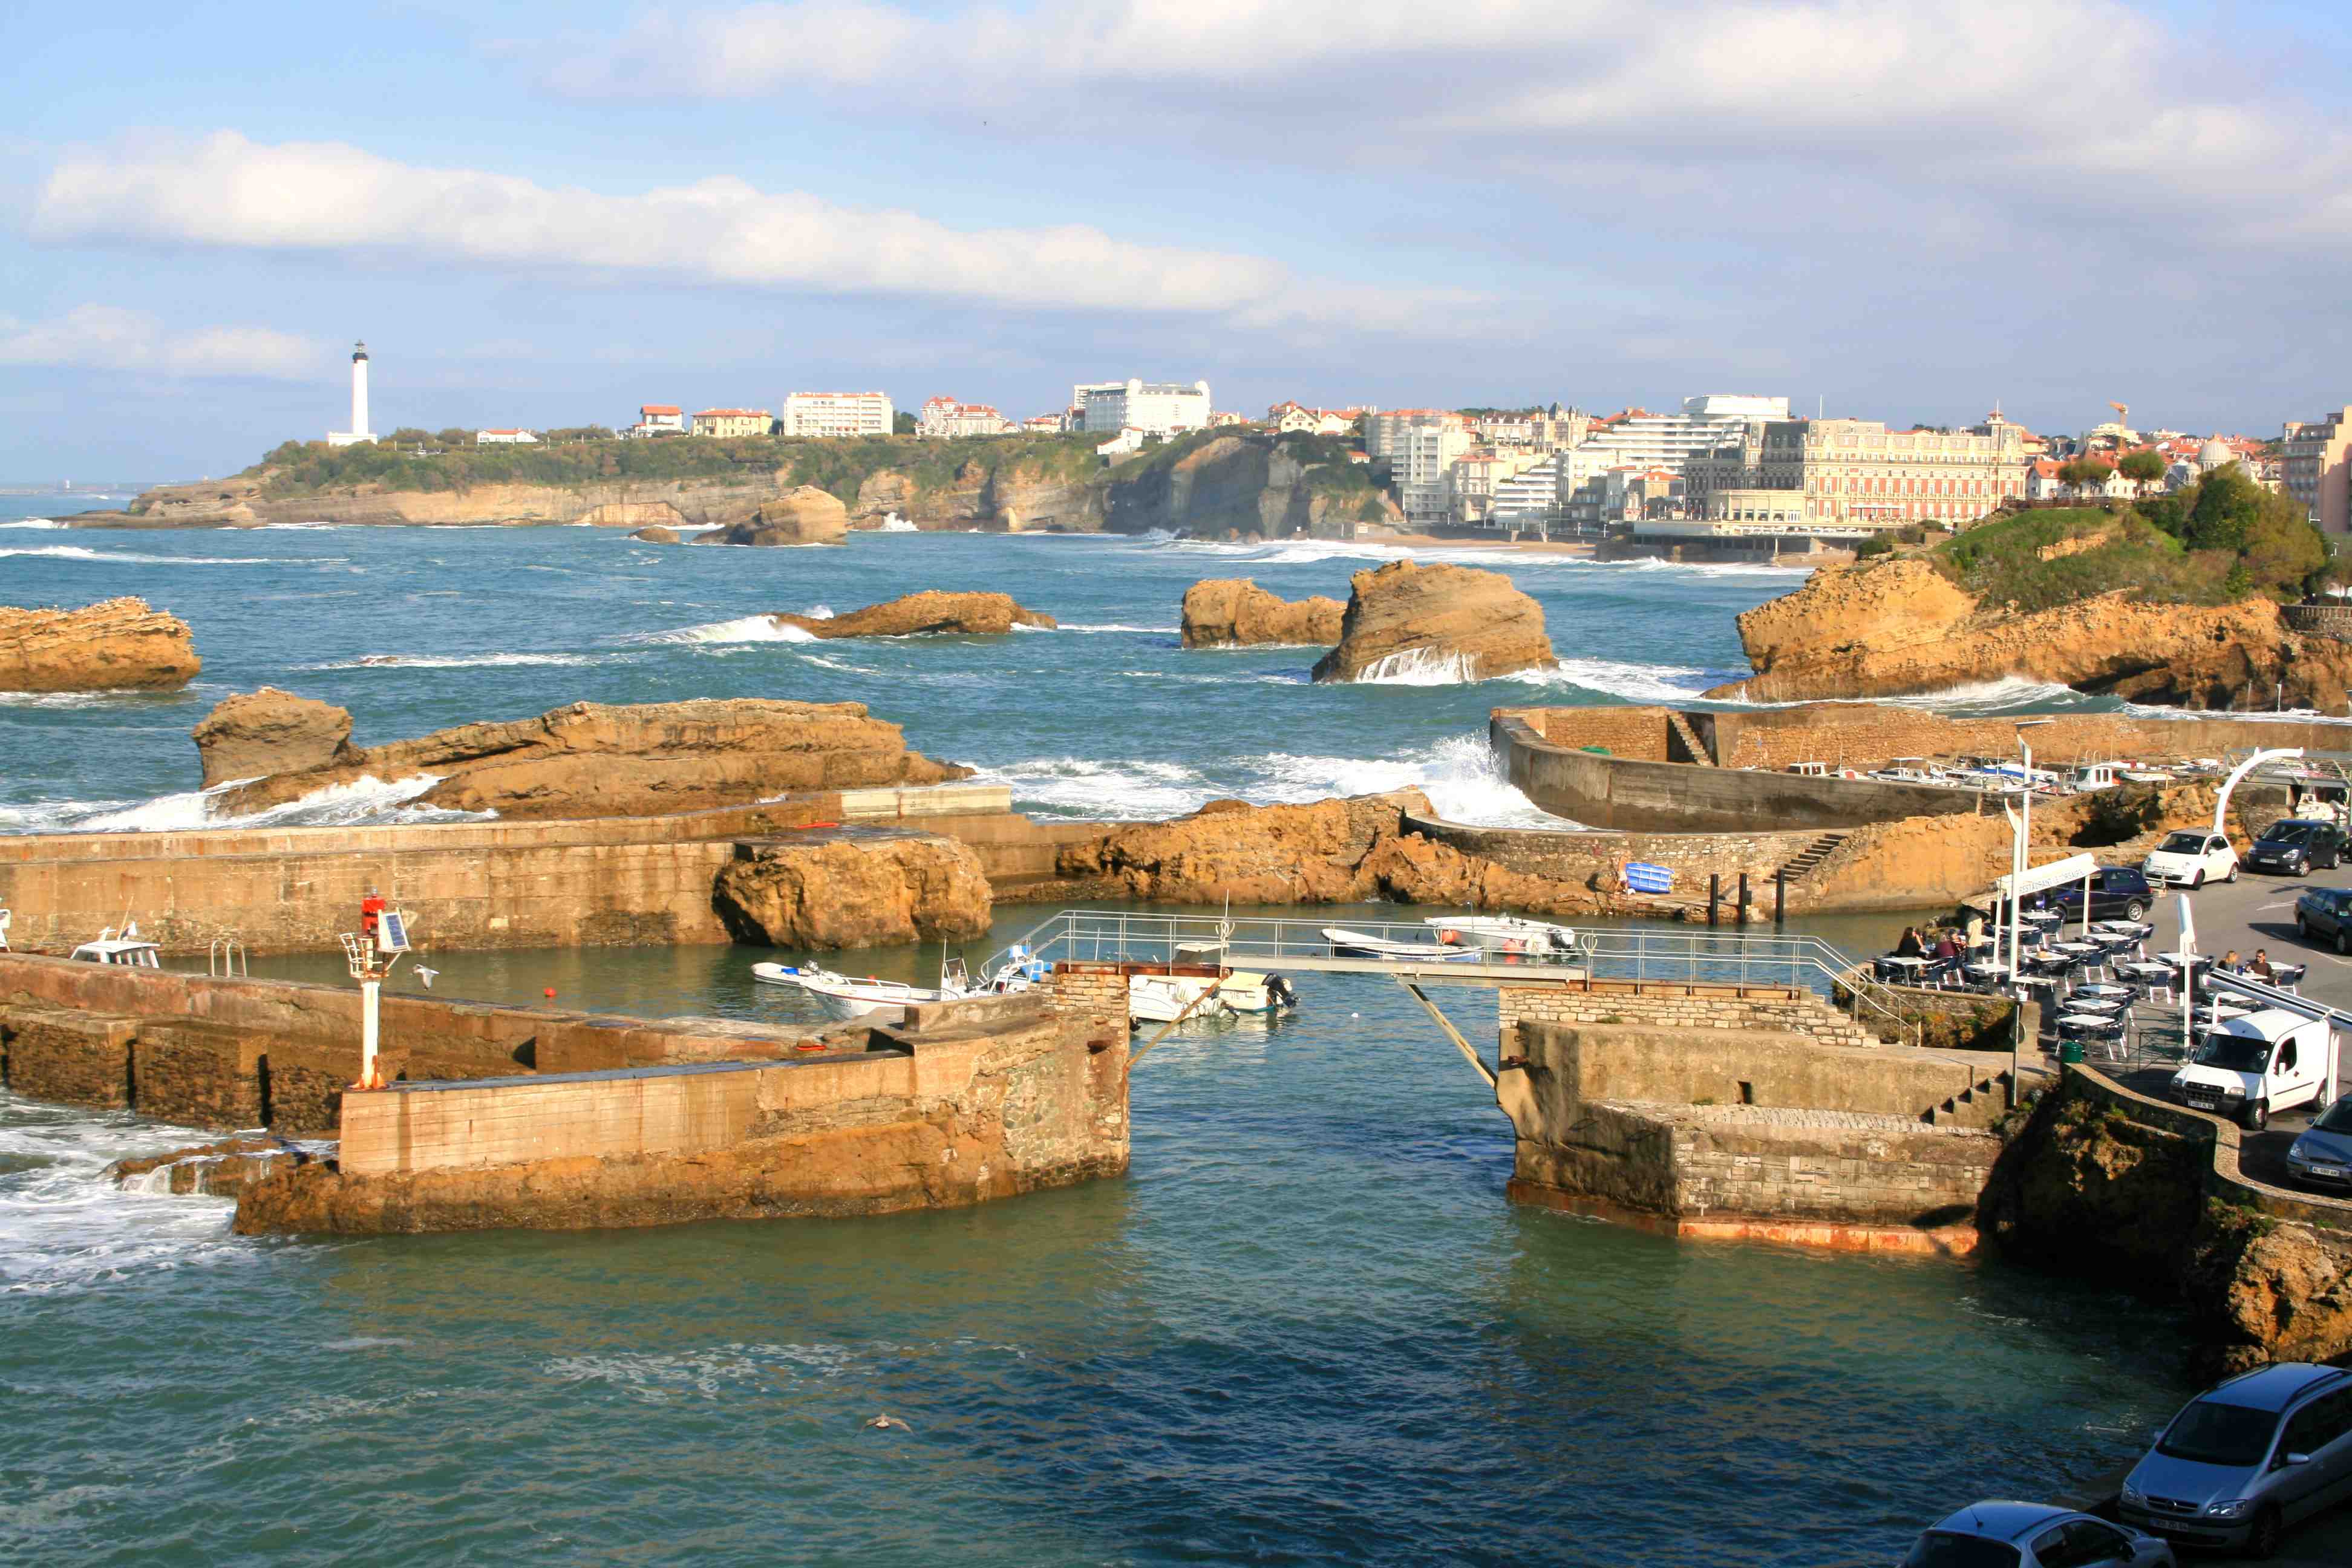 The fishermen's port of Biarritz